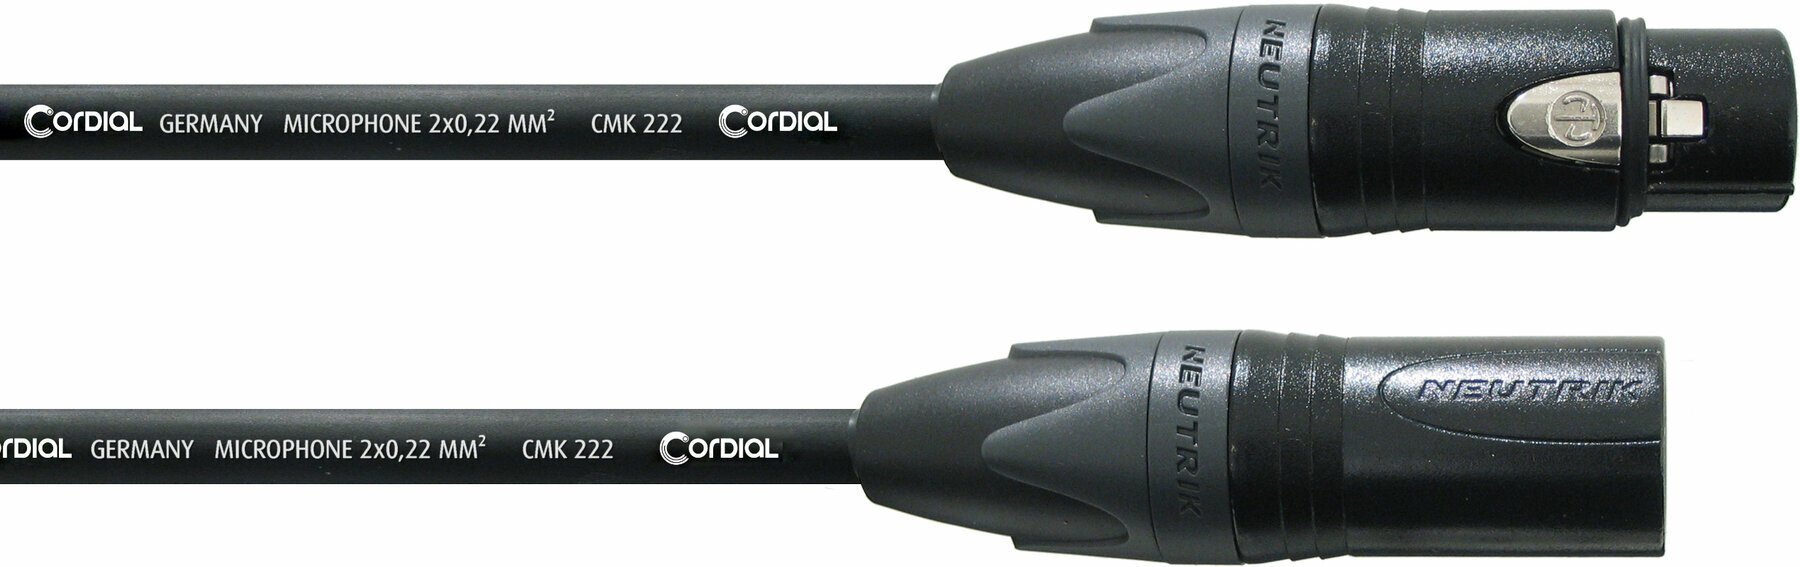 Cable de micrófono Cordial CPM 10 FM Negro 10 m Cable de micrófono